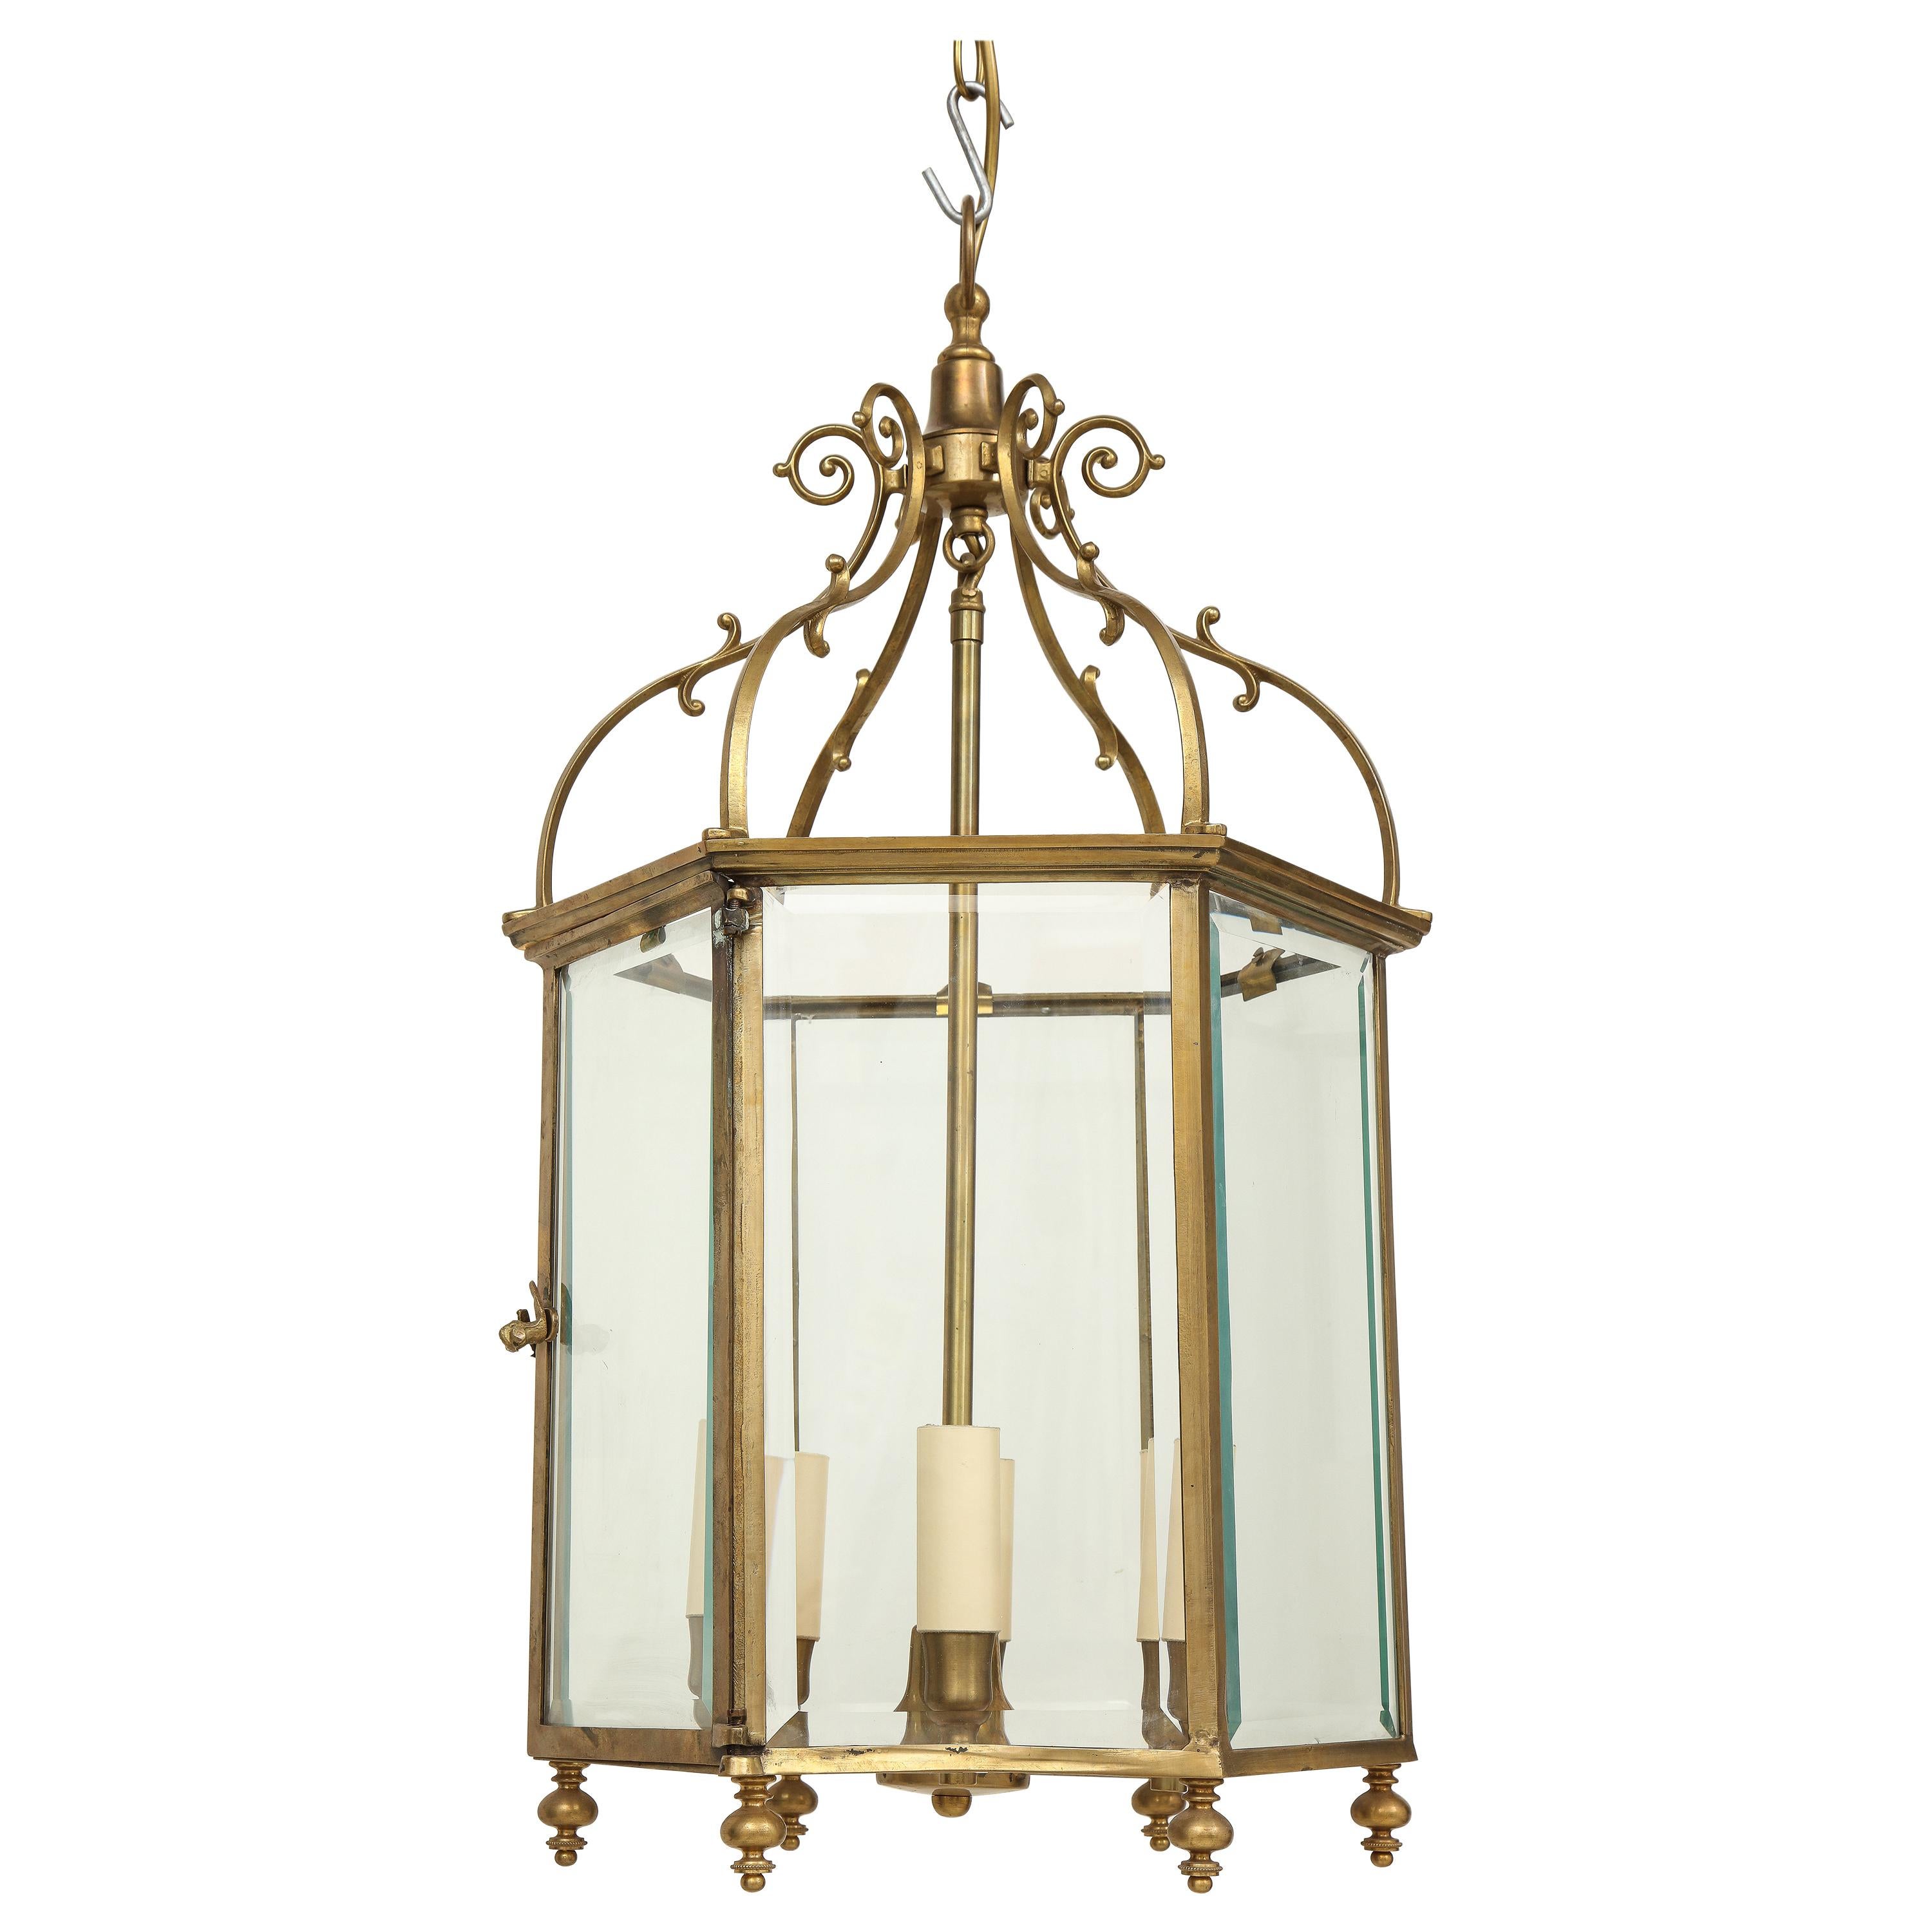 Georgian Style Lacquered Brass Hexagonal Hall Lantern For Sale